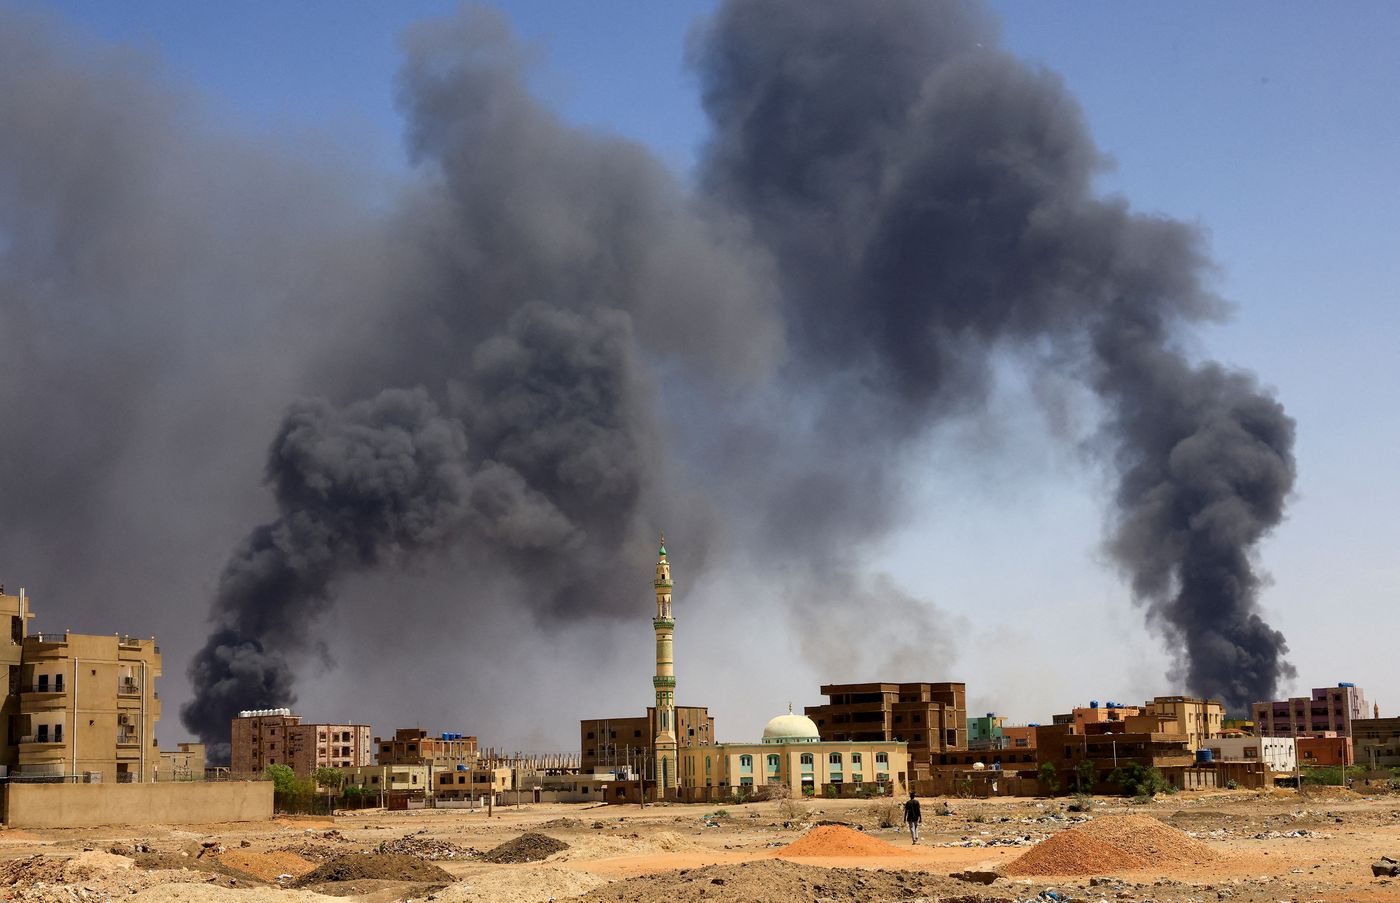 Khartoum North, Sudan, May 1, 2023: Smoke billows from buildings after aerial bombardments.